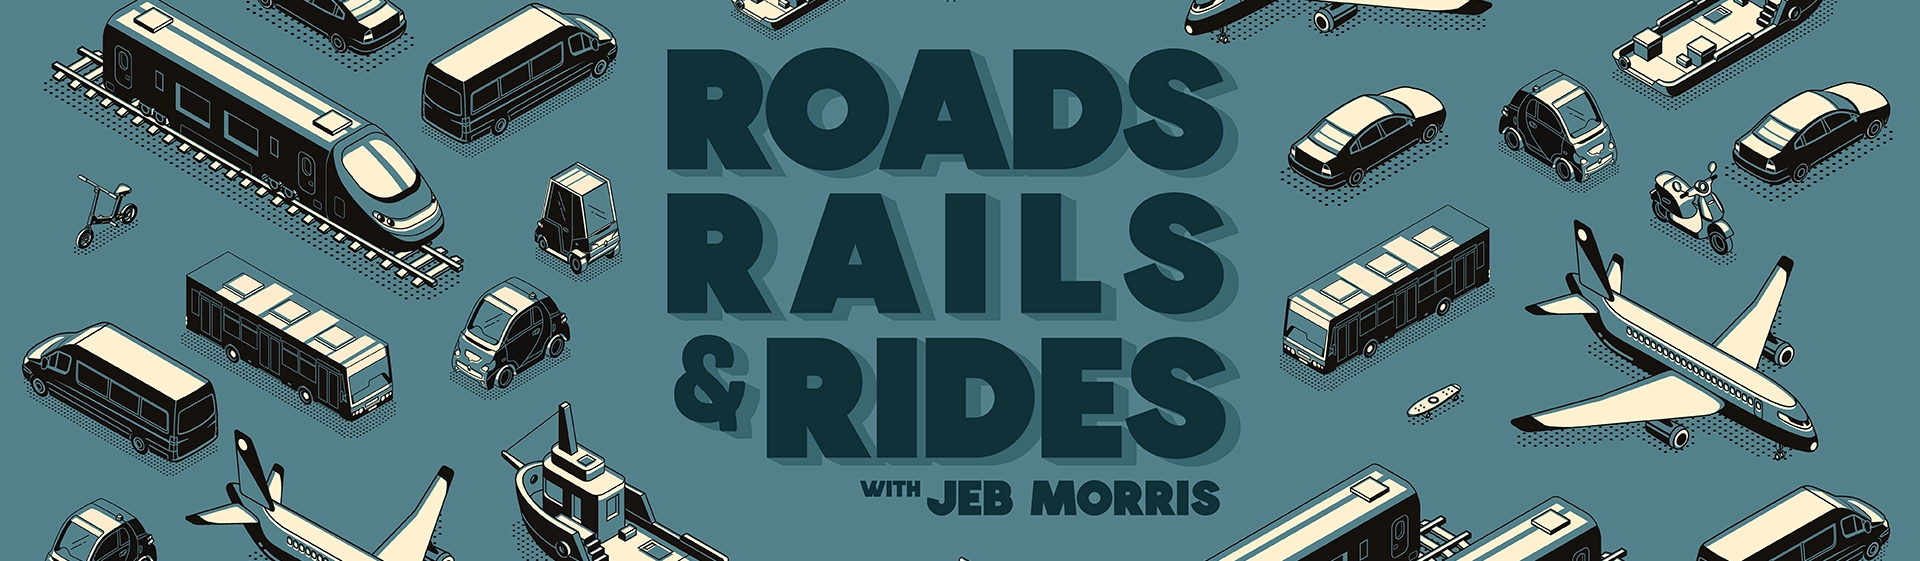 Roads, Rails, & Rides: A New Transportation Series